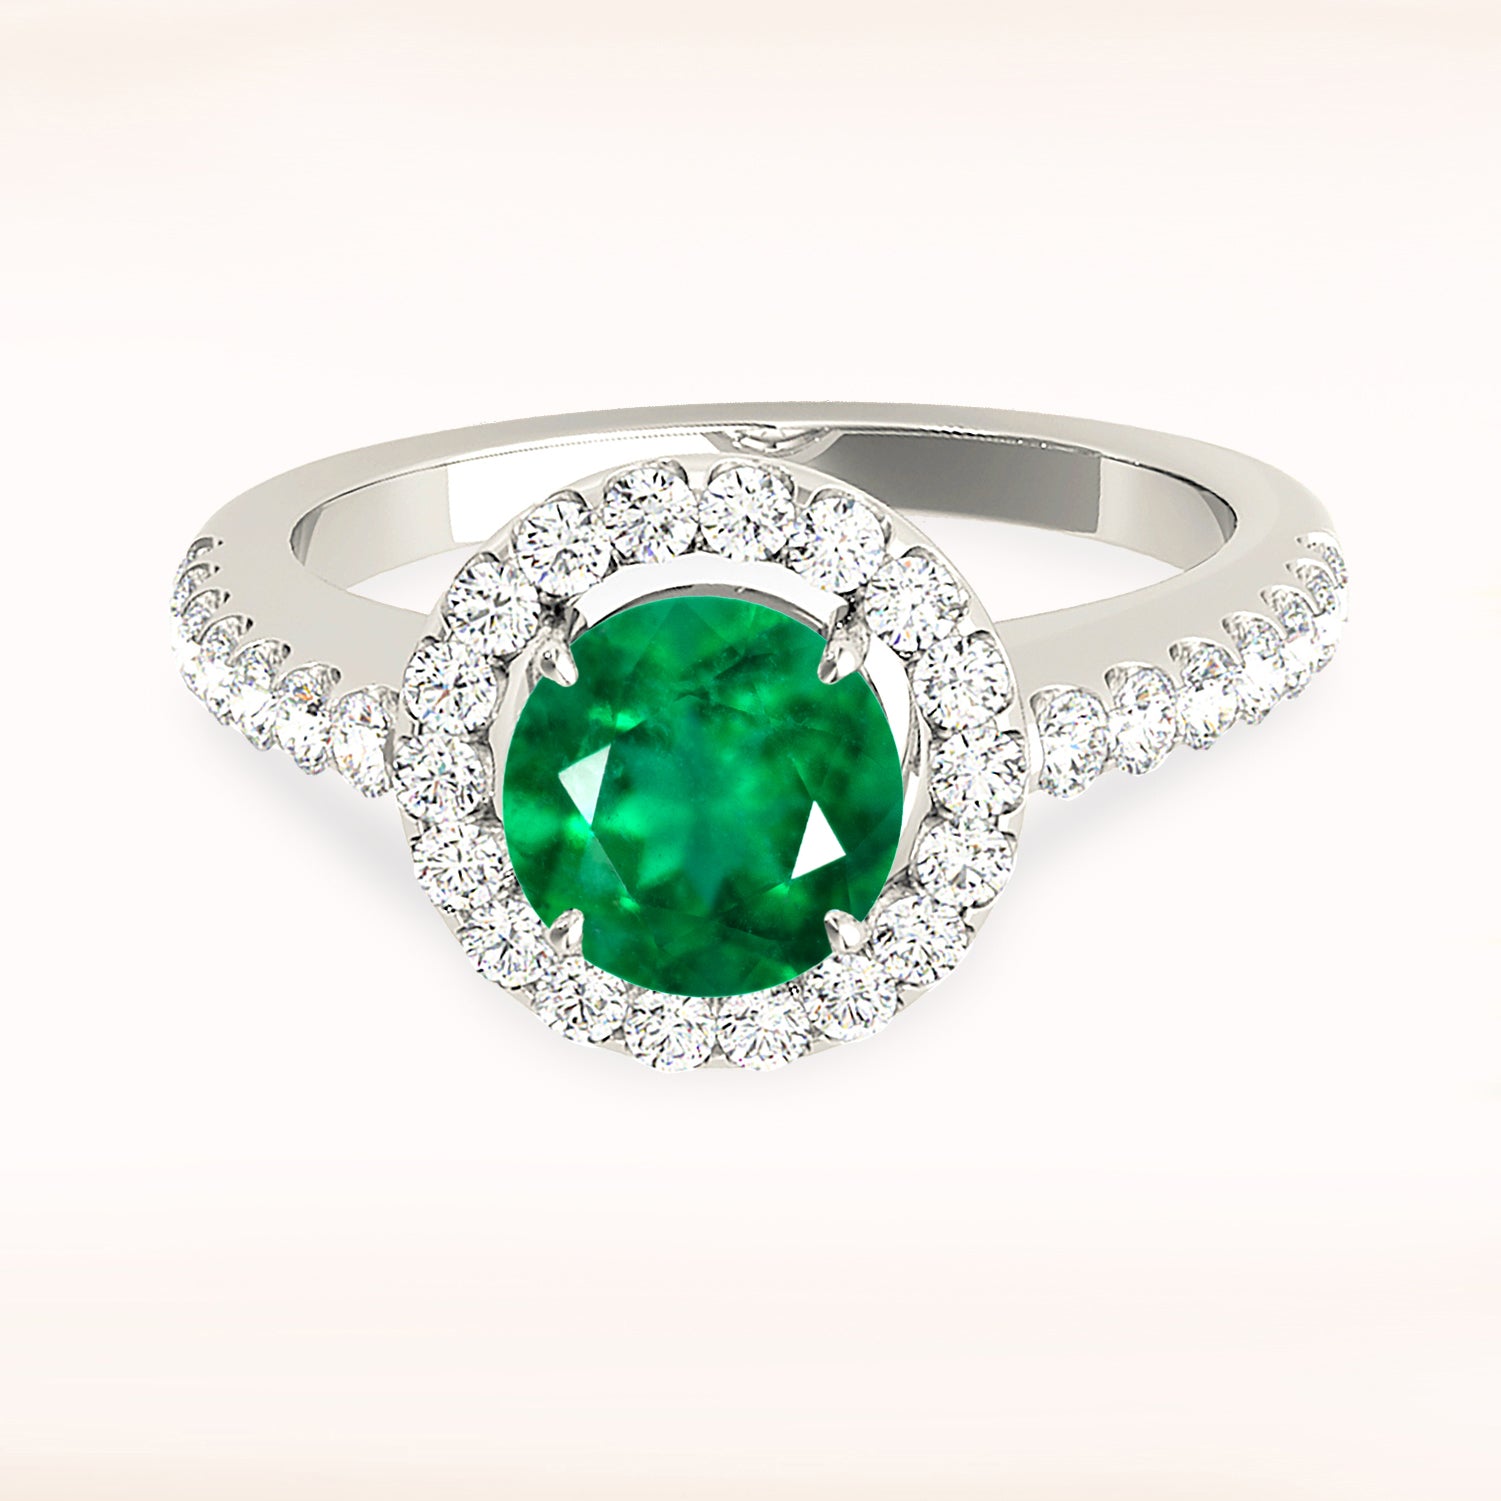 1.14 ct. Genuine Emerald Ring With 0.50 ctw. Diamond Halo And Thin Diamond Shank-in 14K/18K White, Yellow, Rose Gold and Platinum - Christmas Jewelry Gift -VIRABYANI